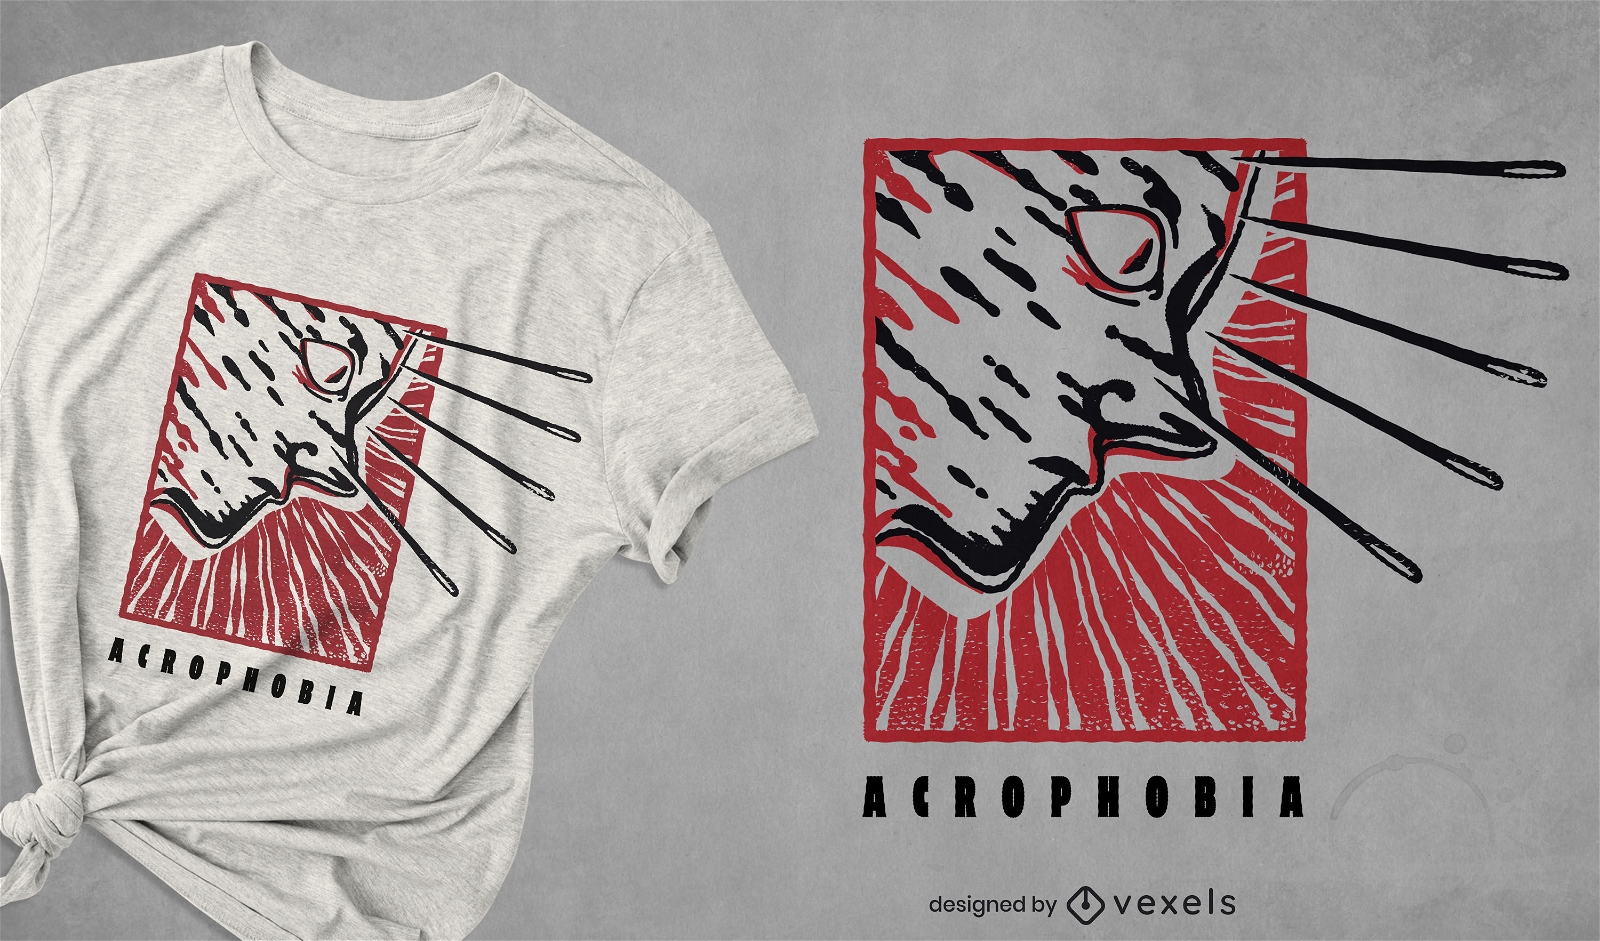 Gruseliges Akrophobie-T-Shirt-Design